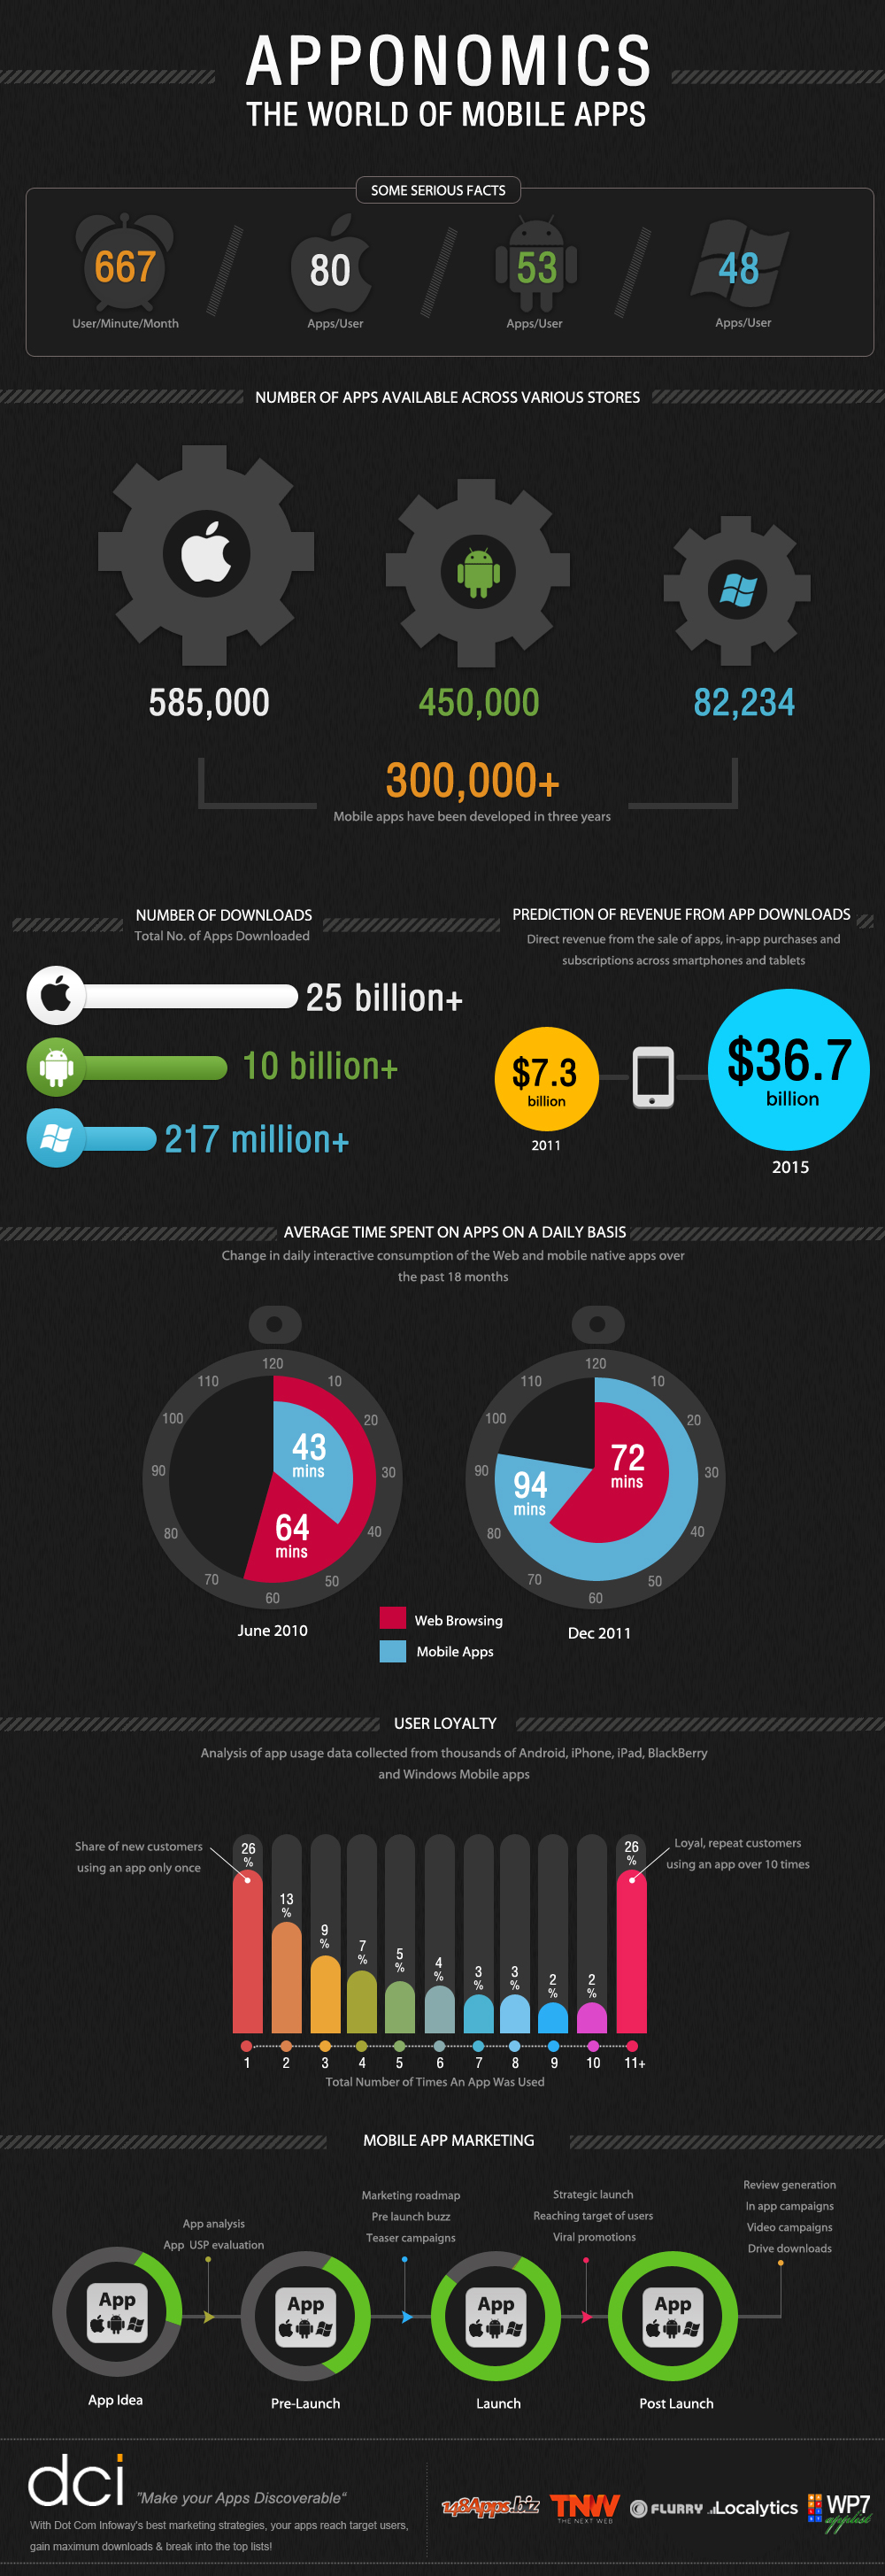 mobile app marketing infographic